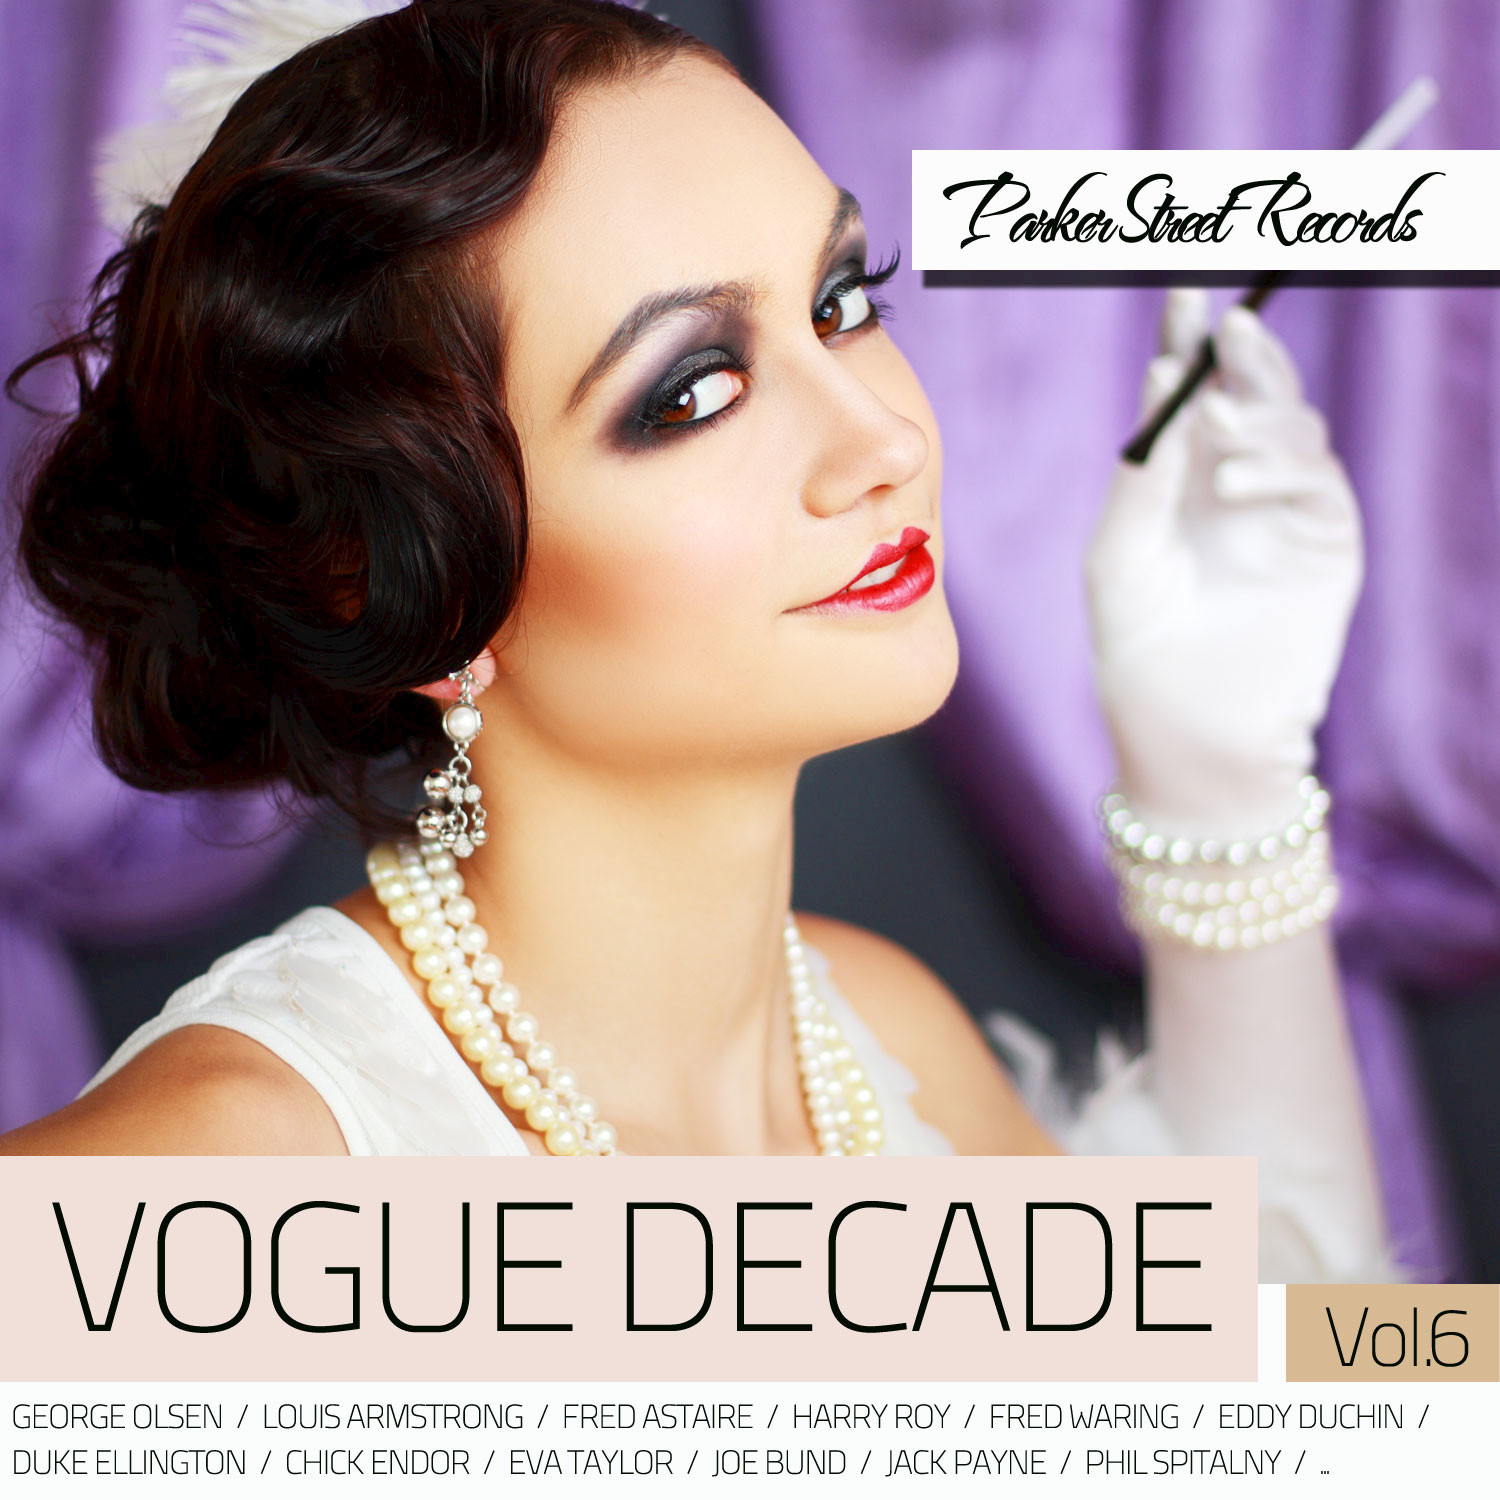 Vogue Decade, Vol. 6